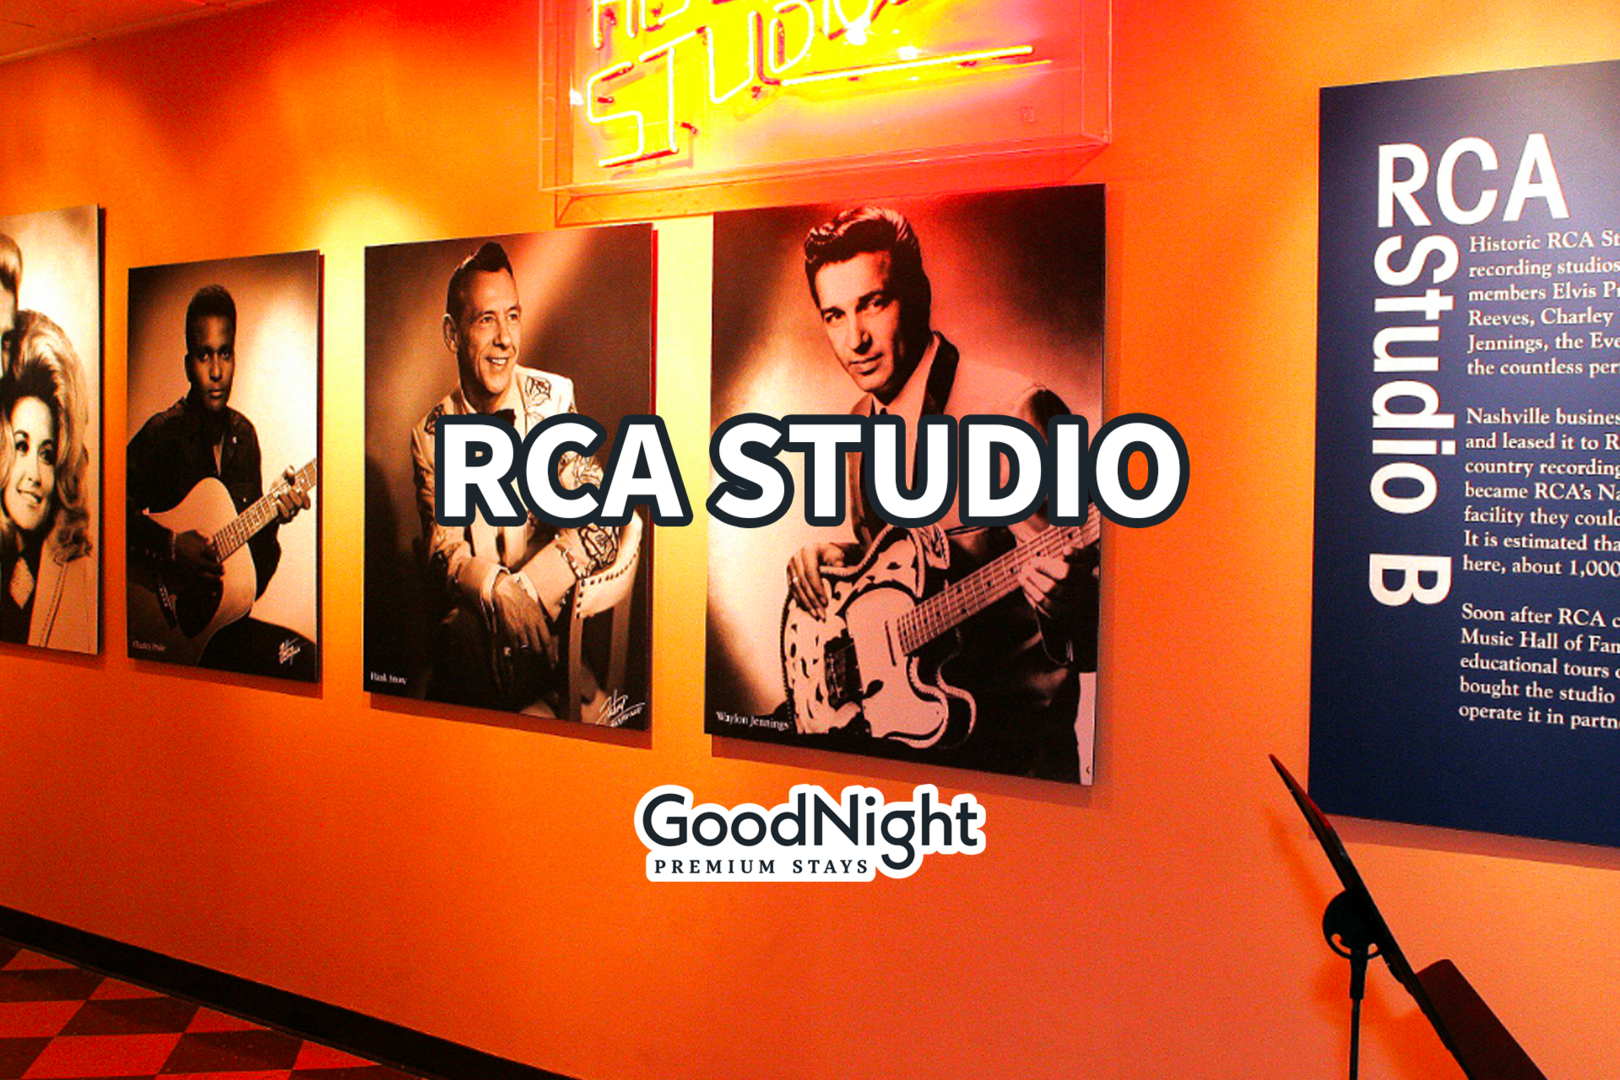 3 mins: RCA Studio